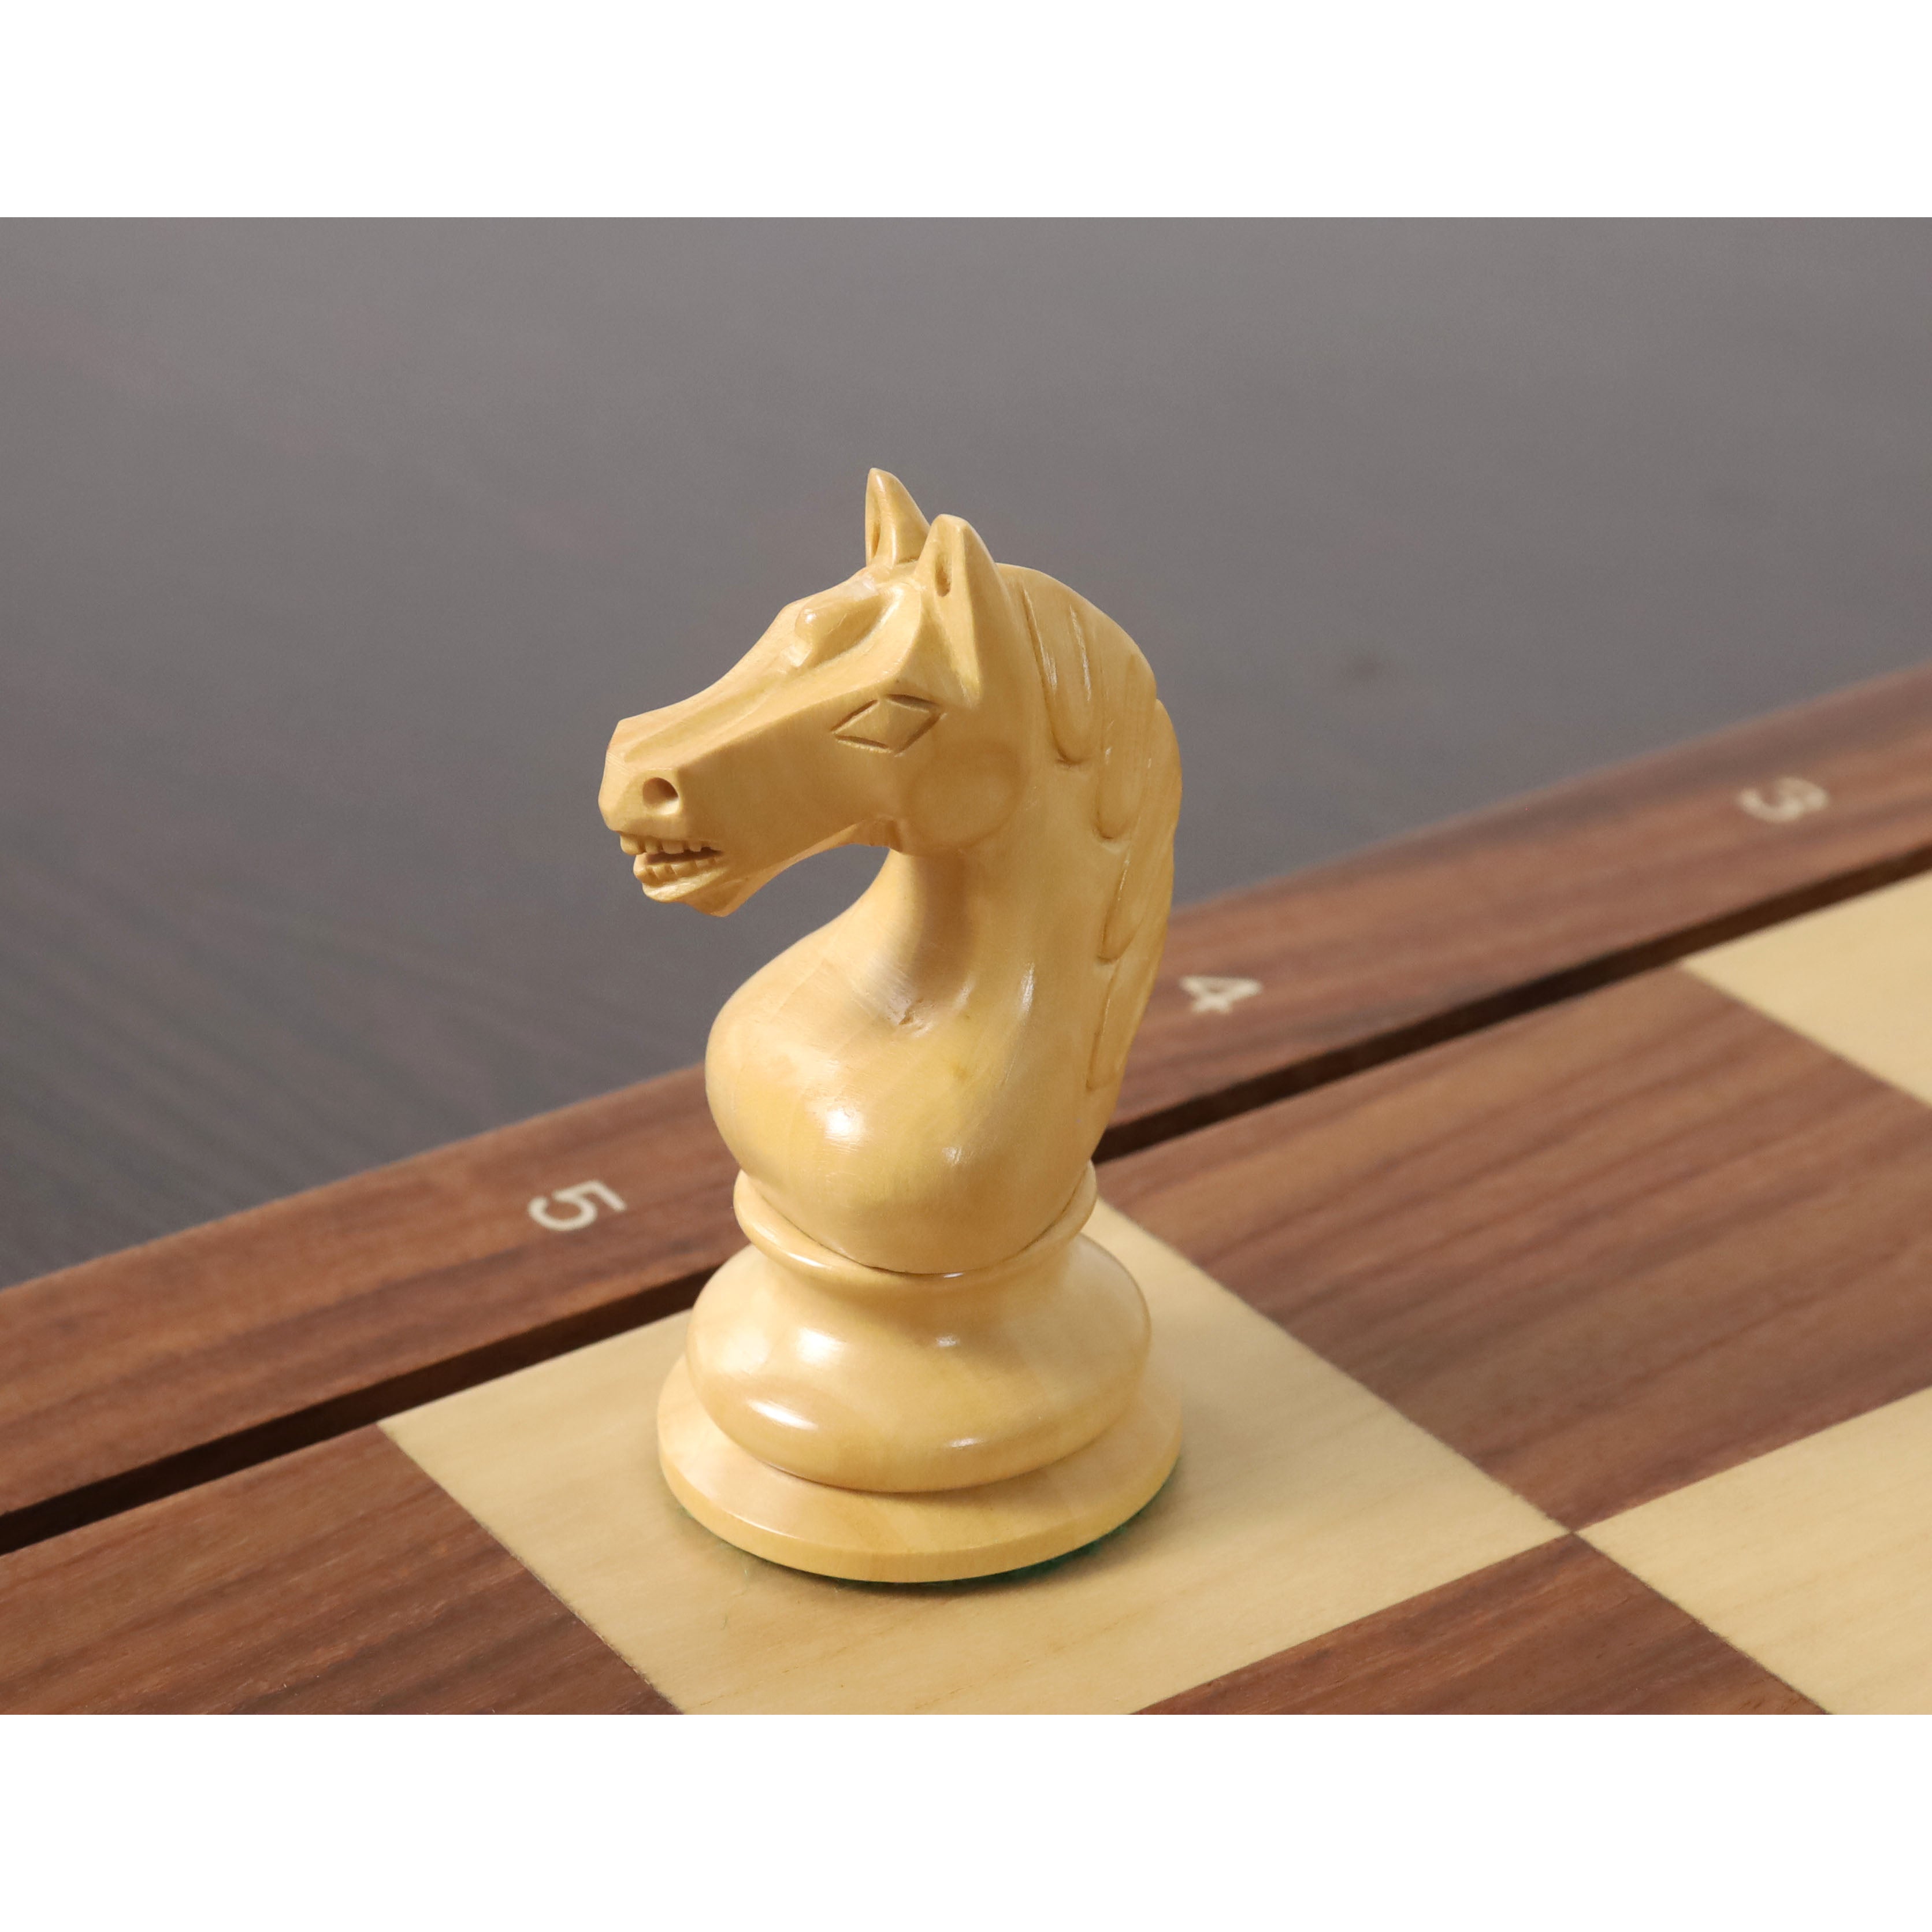 1933 Botvinnik Flohr-I Soviet Chess Set- Chess Pieces Only - Golden Rosewood - 3.6" King